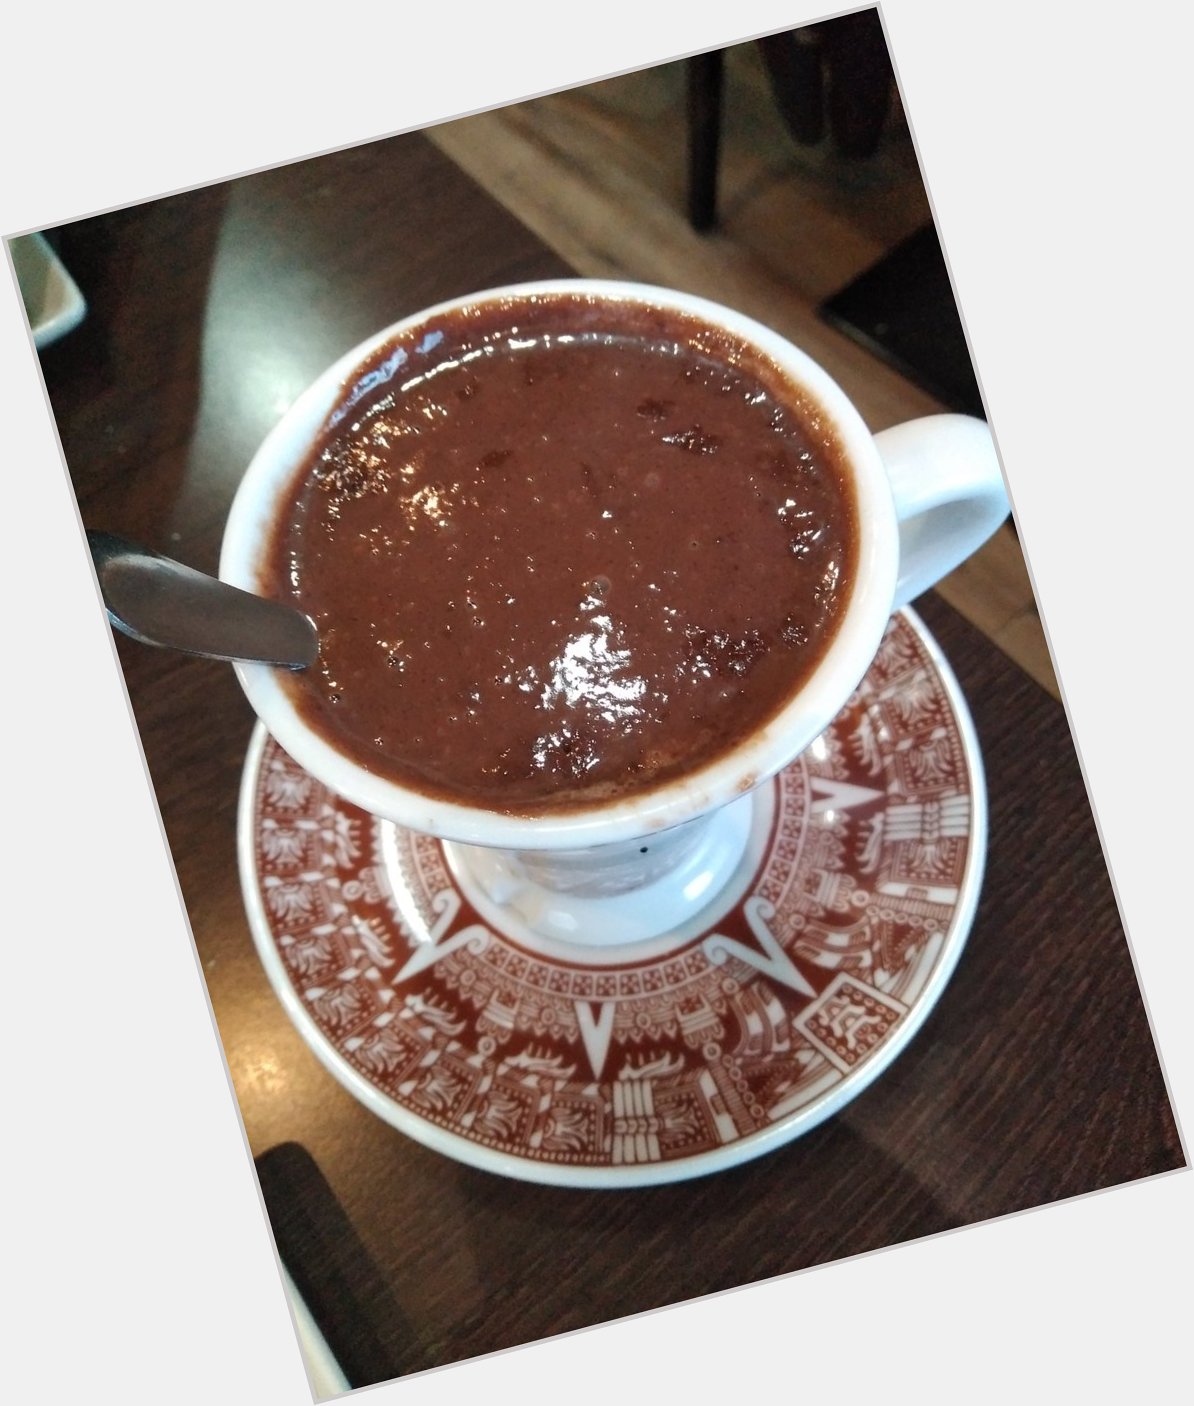 I\m having a hot chocolate because of your birthday .
Happy birthday   . 